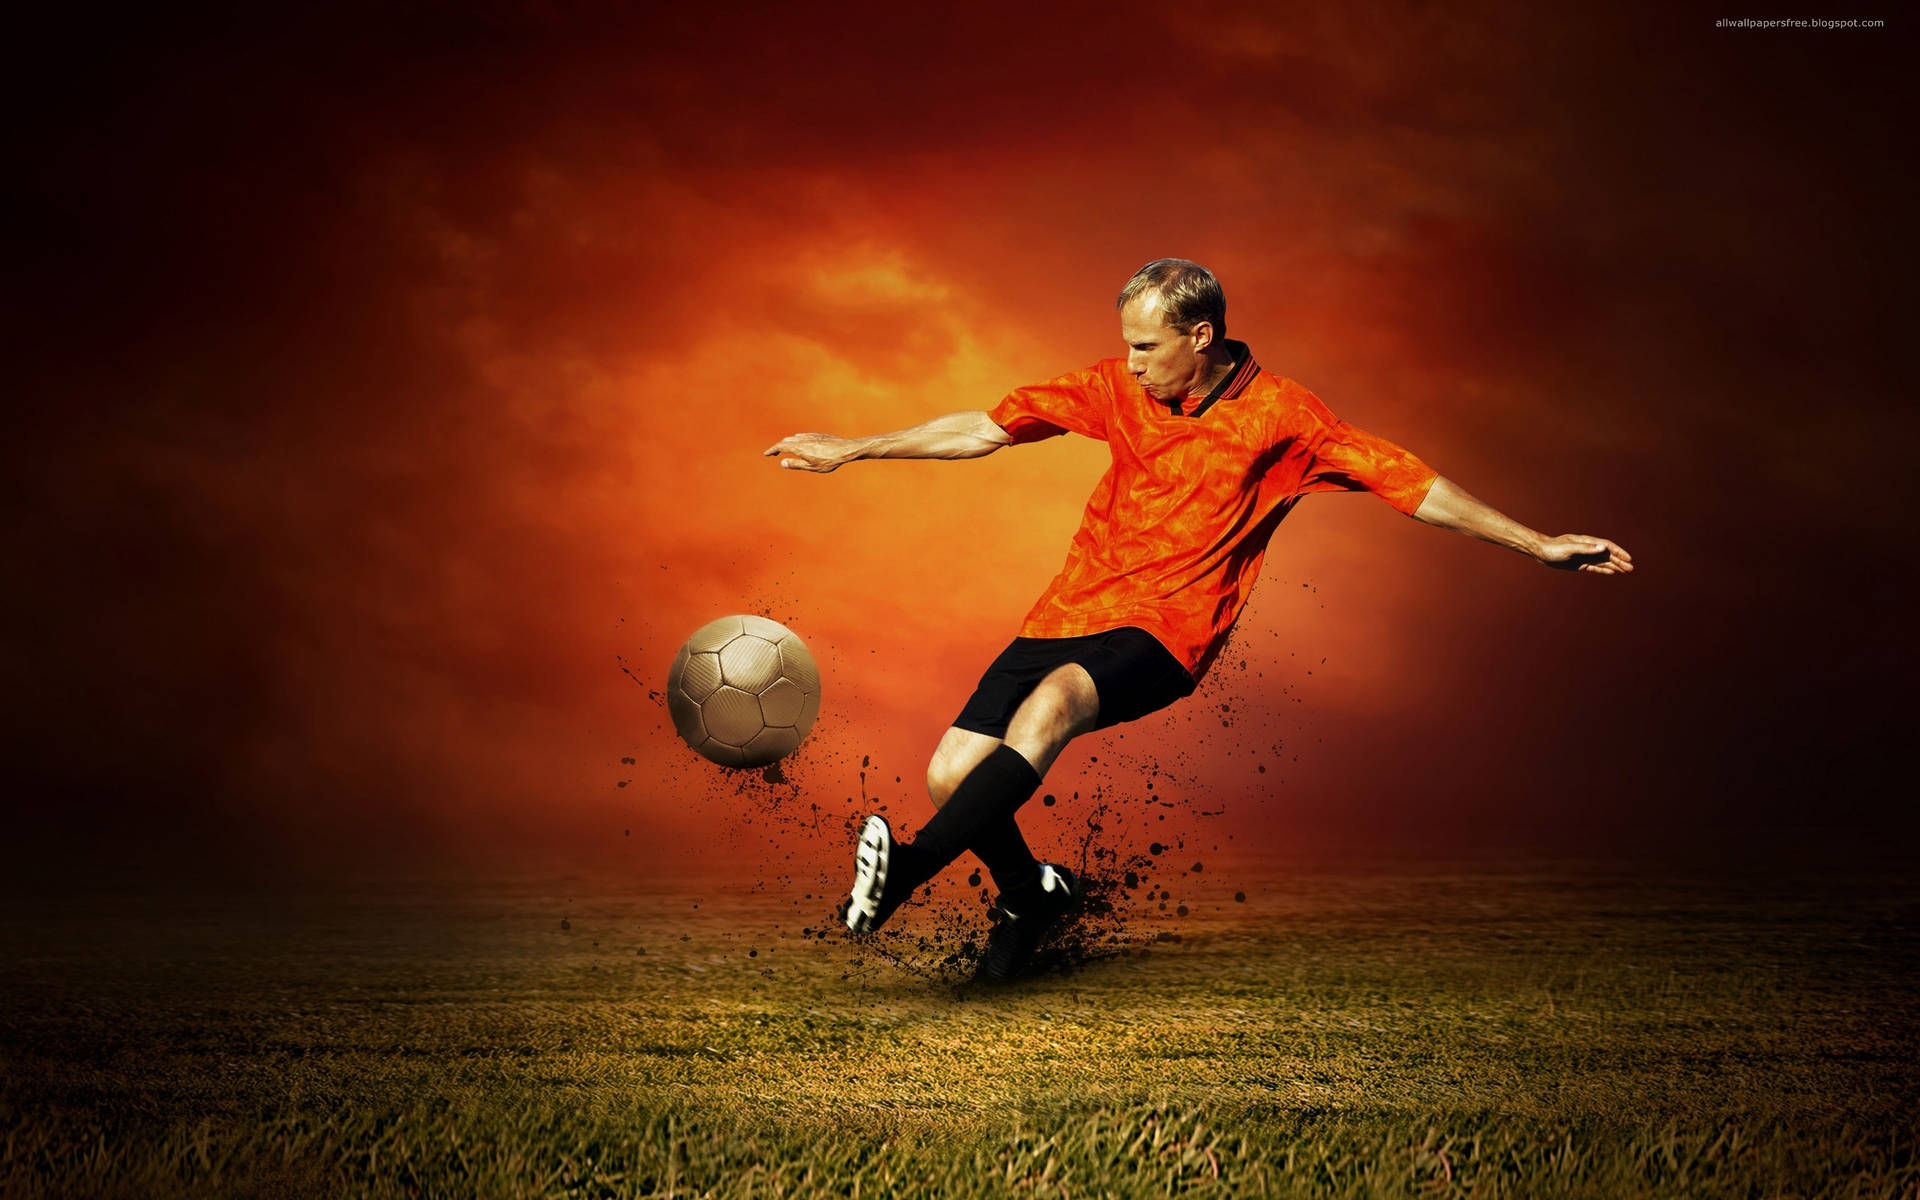 Cool Soccer Player Orange Background